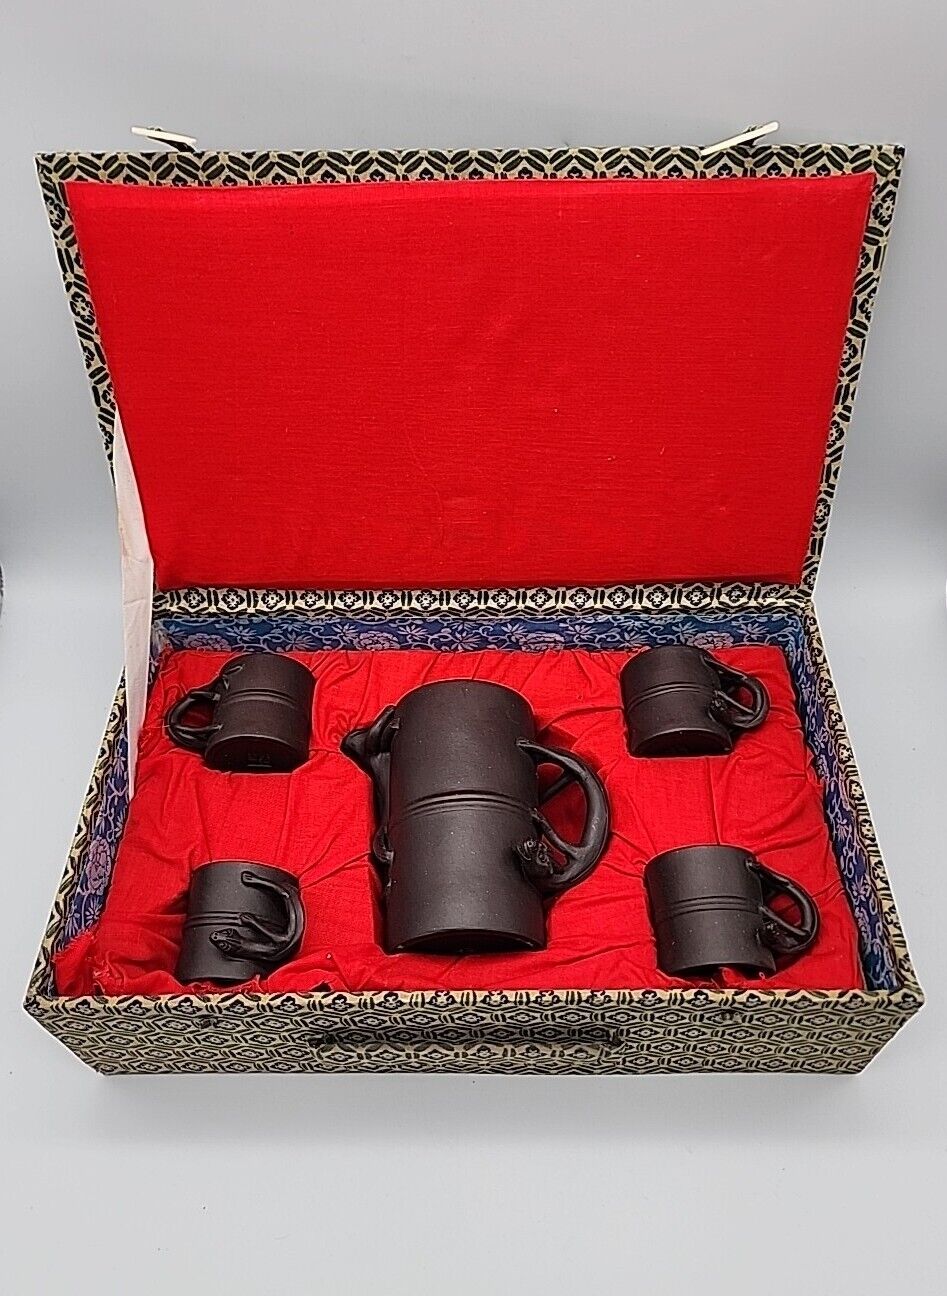 Yixing Brown Clay Teapot Set in Box Jiangsu Province Dragon Oriental Tea 4 Cups